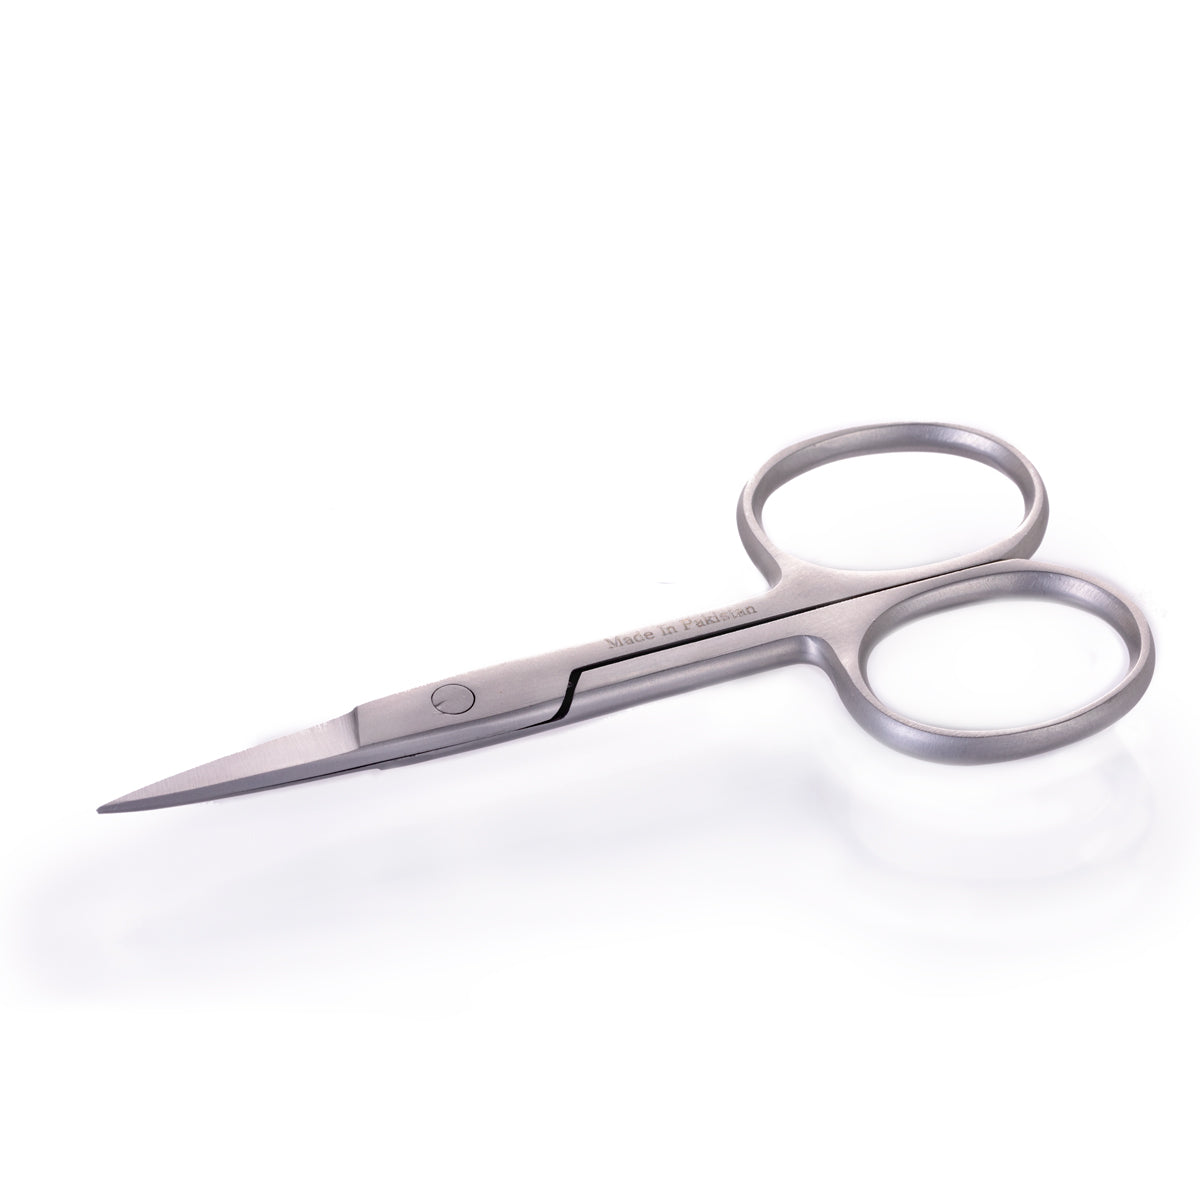 BL Lash Mini Scissors for Eyelash Extensions